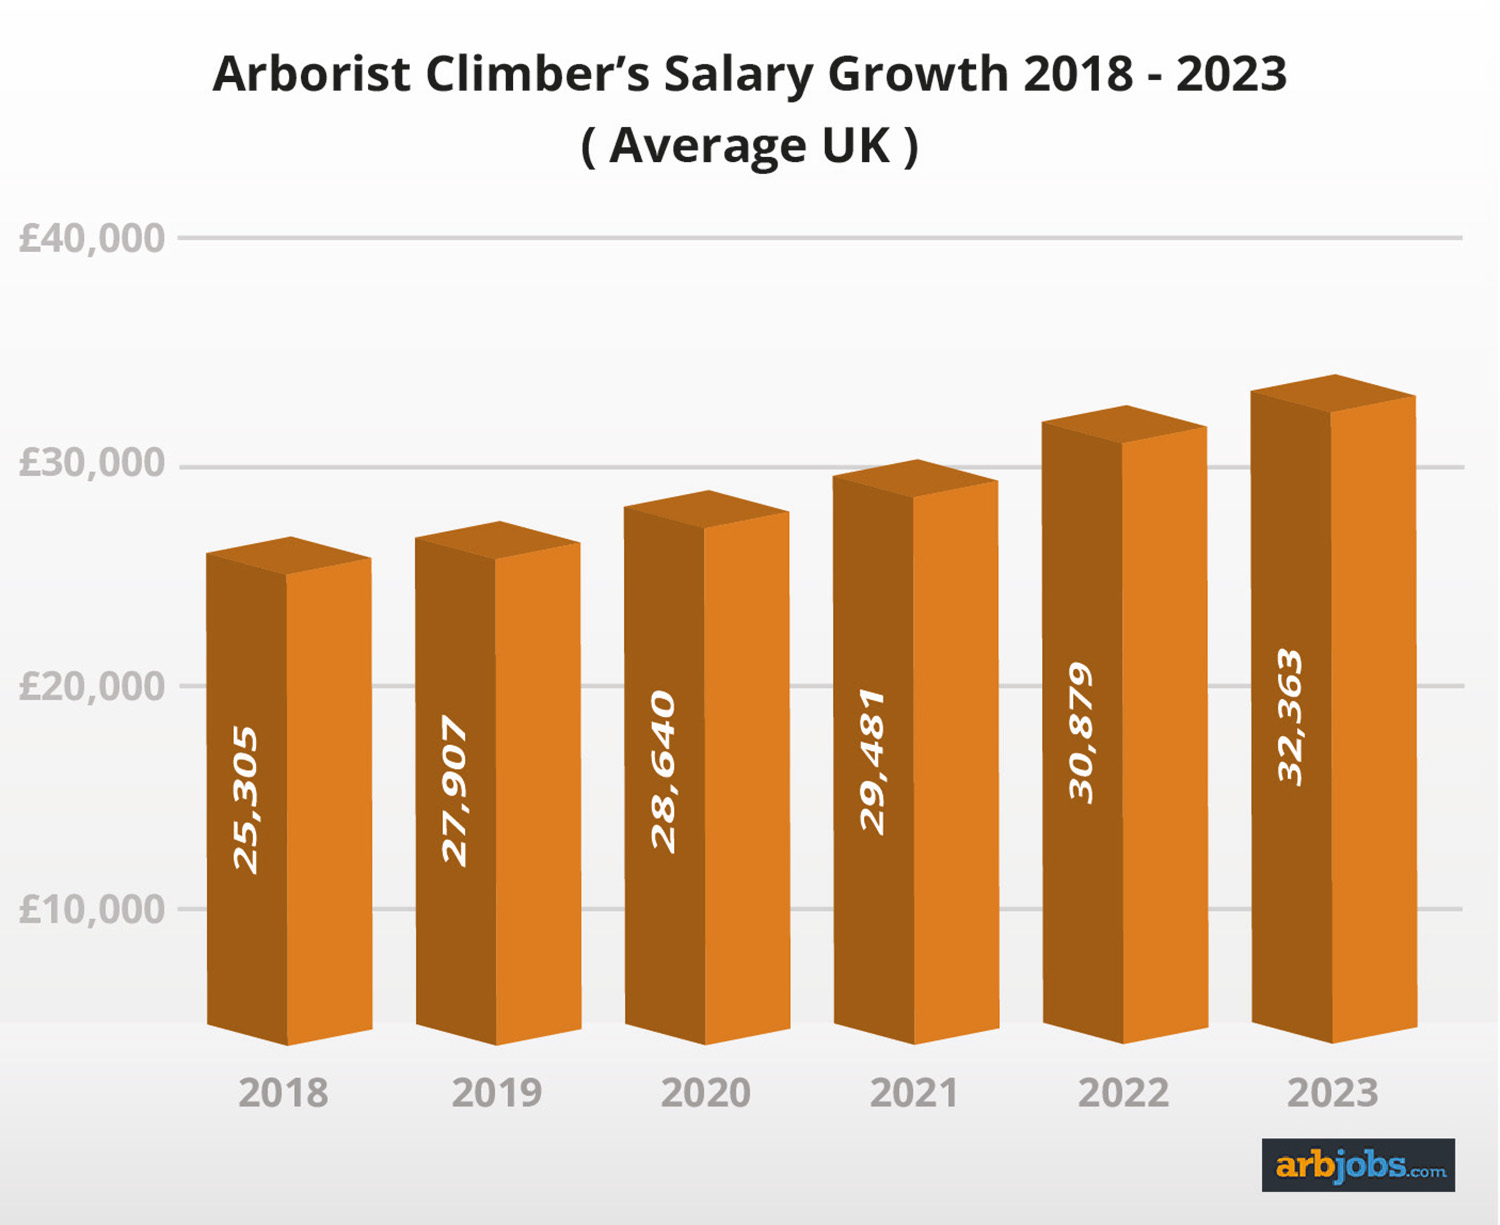 Arborist Climber’s Salary Growth 2018-2023 (Average UK)